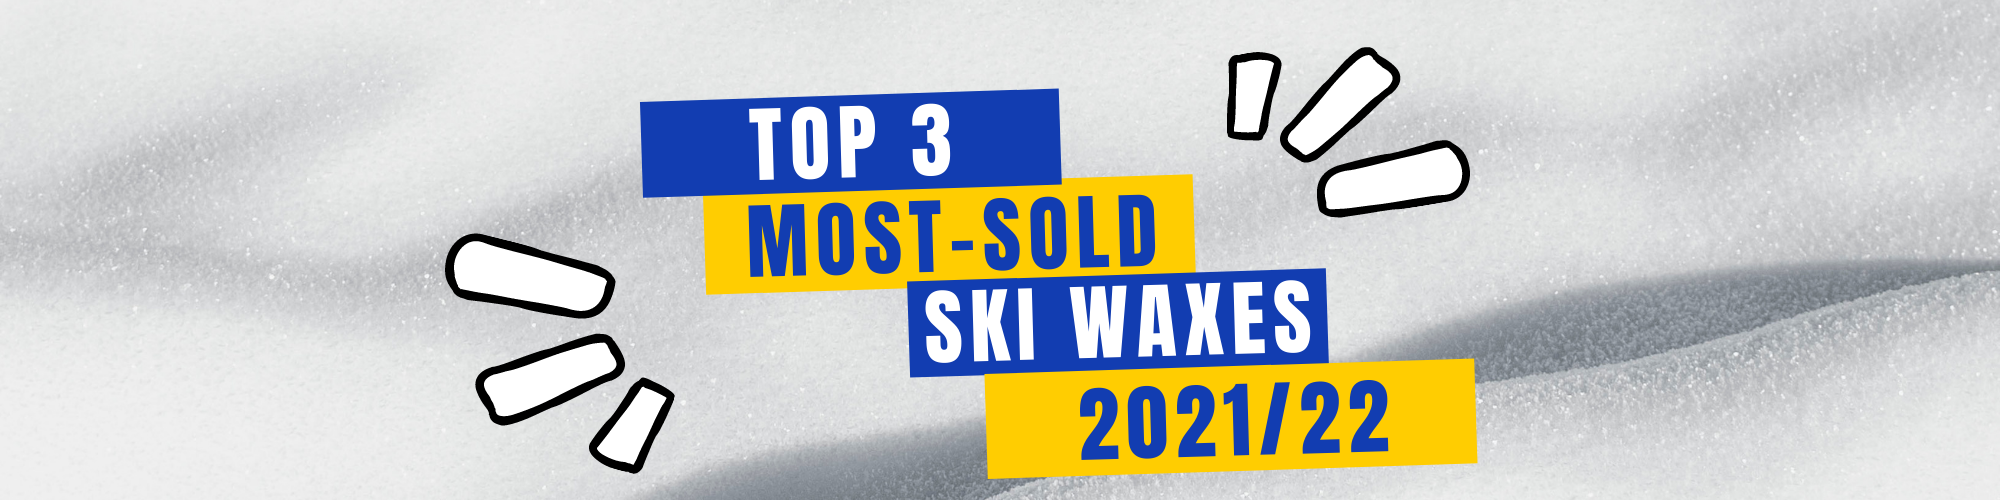 Skiwax Europe: TOP 3 most-sold ski waxes from 2021/22 [Rex, Holmenkol, Gallium, Toko, Maplus, Swix, Vauhti, Start]